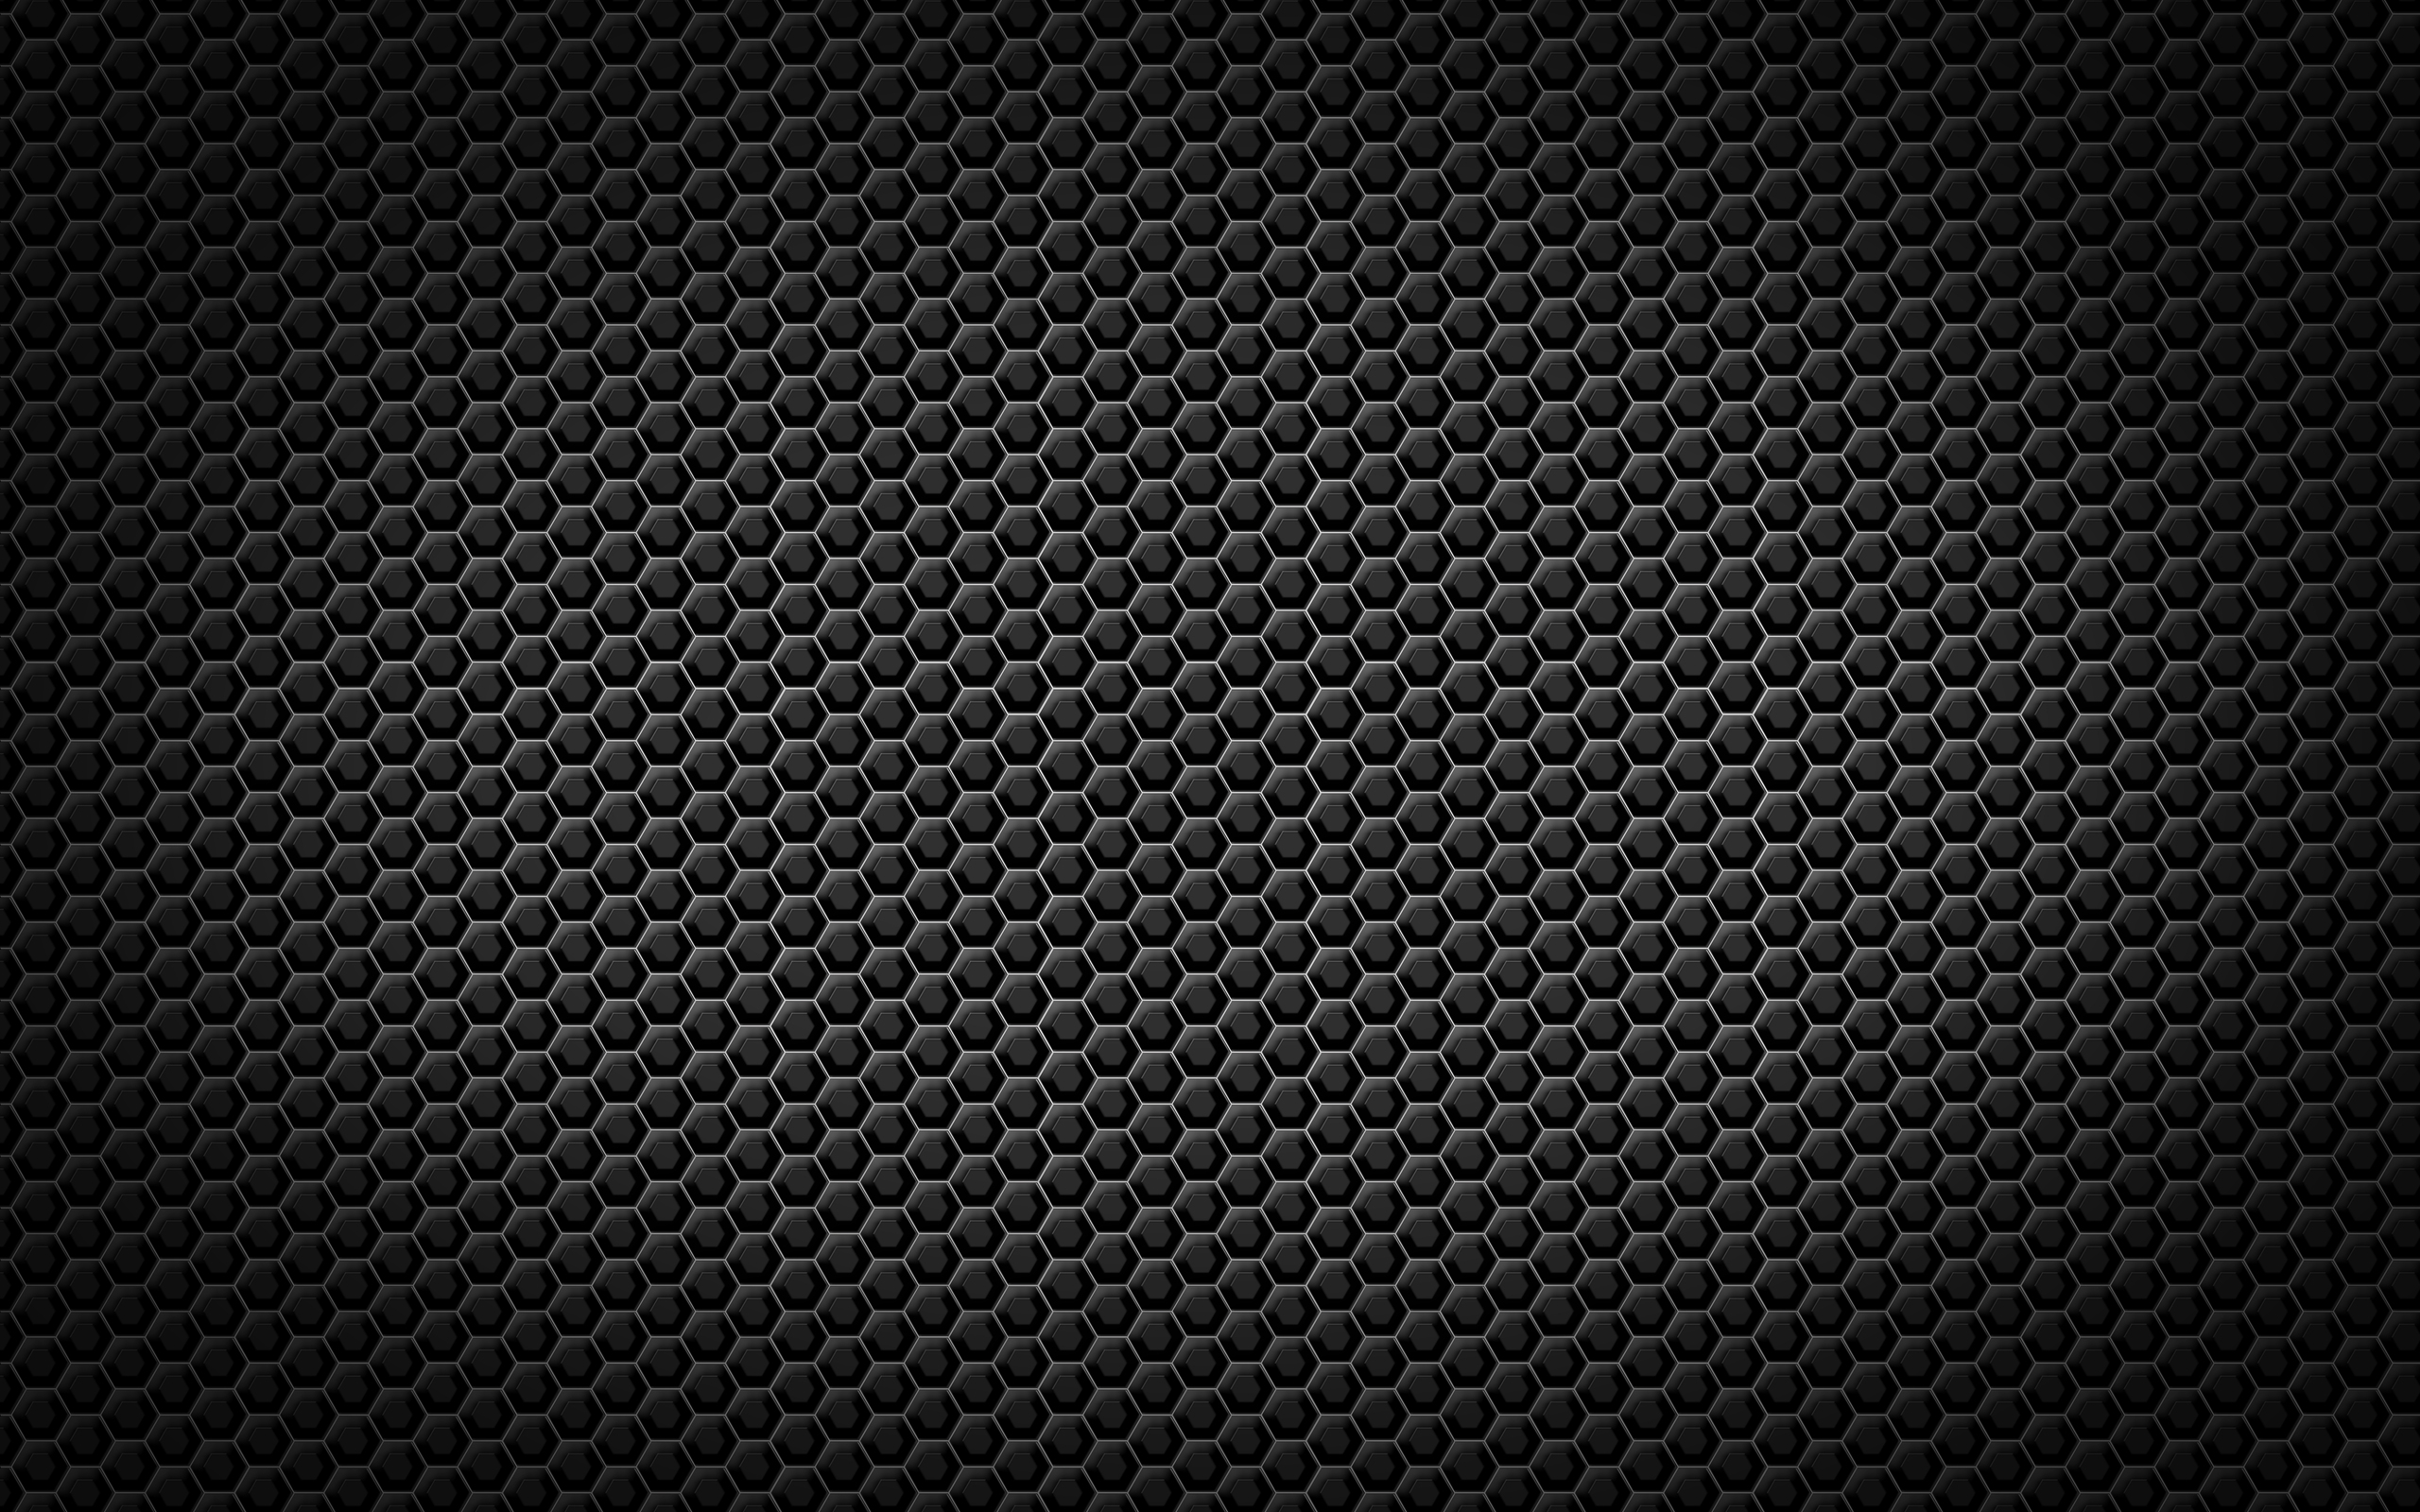 Cool Black Background Black Cool Background ·① Wallpapertag Choose